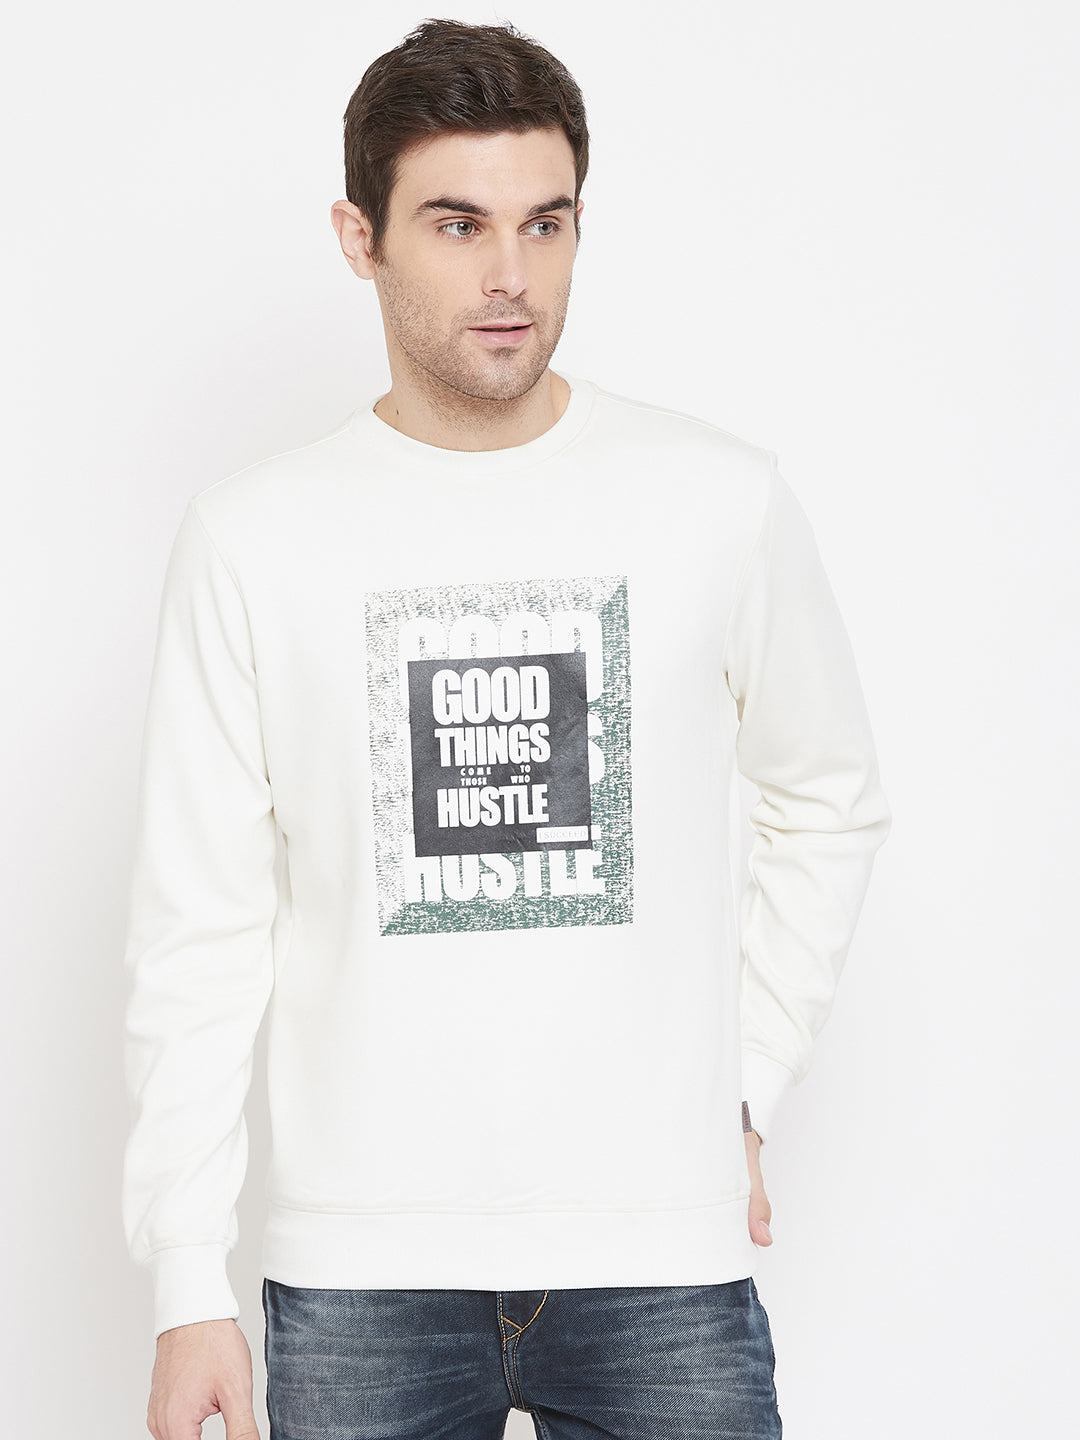 White Printed Round Neck Sweatshirt - Men Sweatshirts